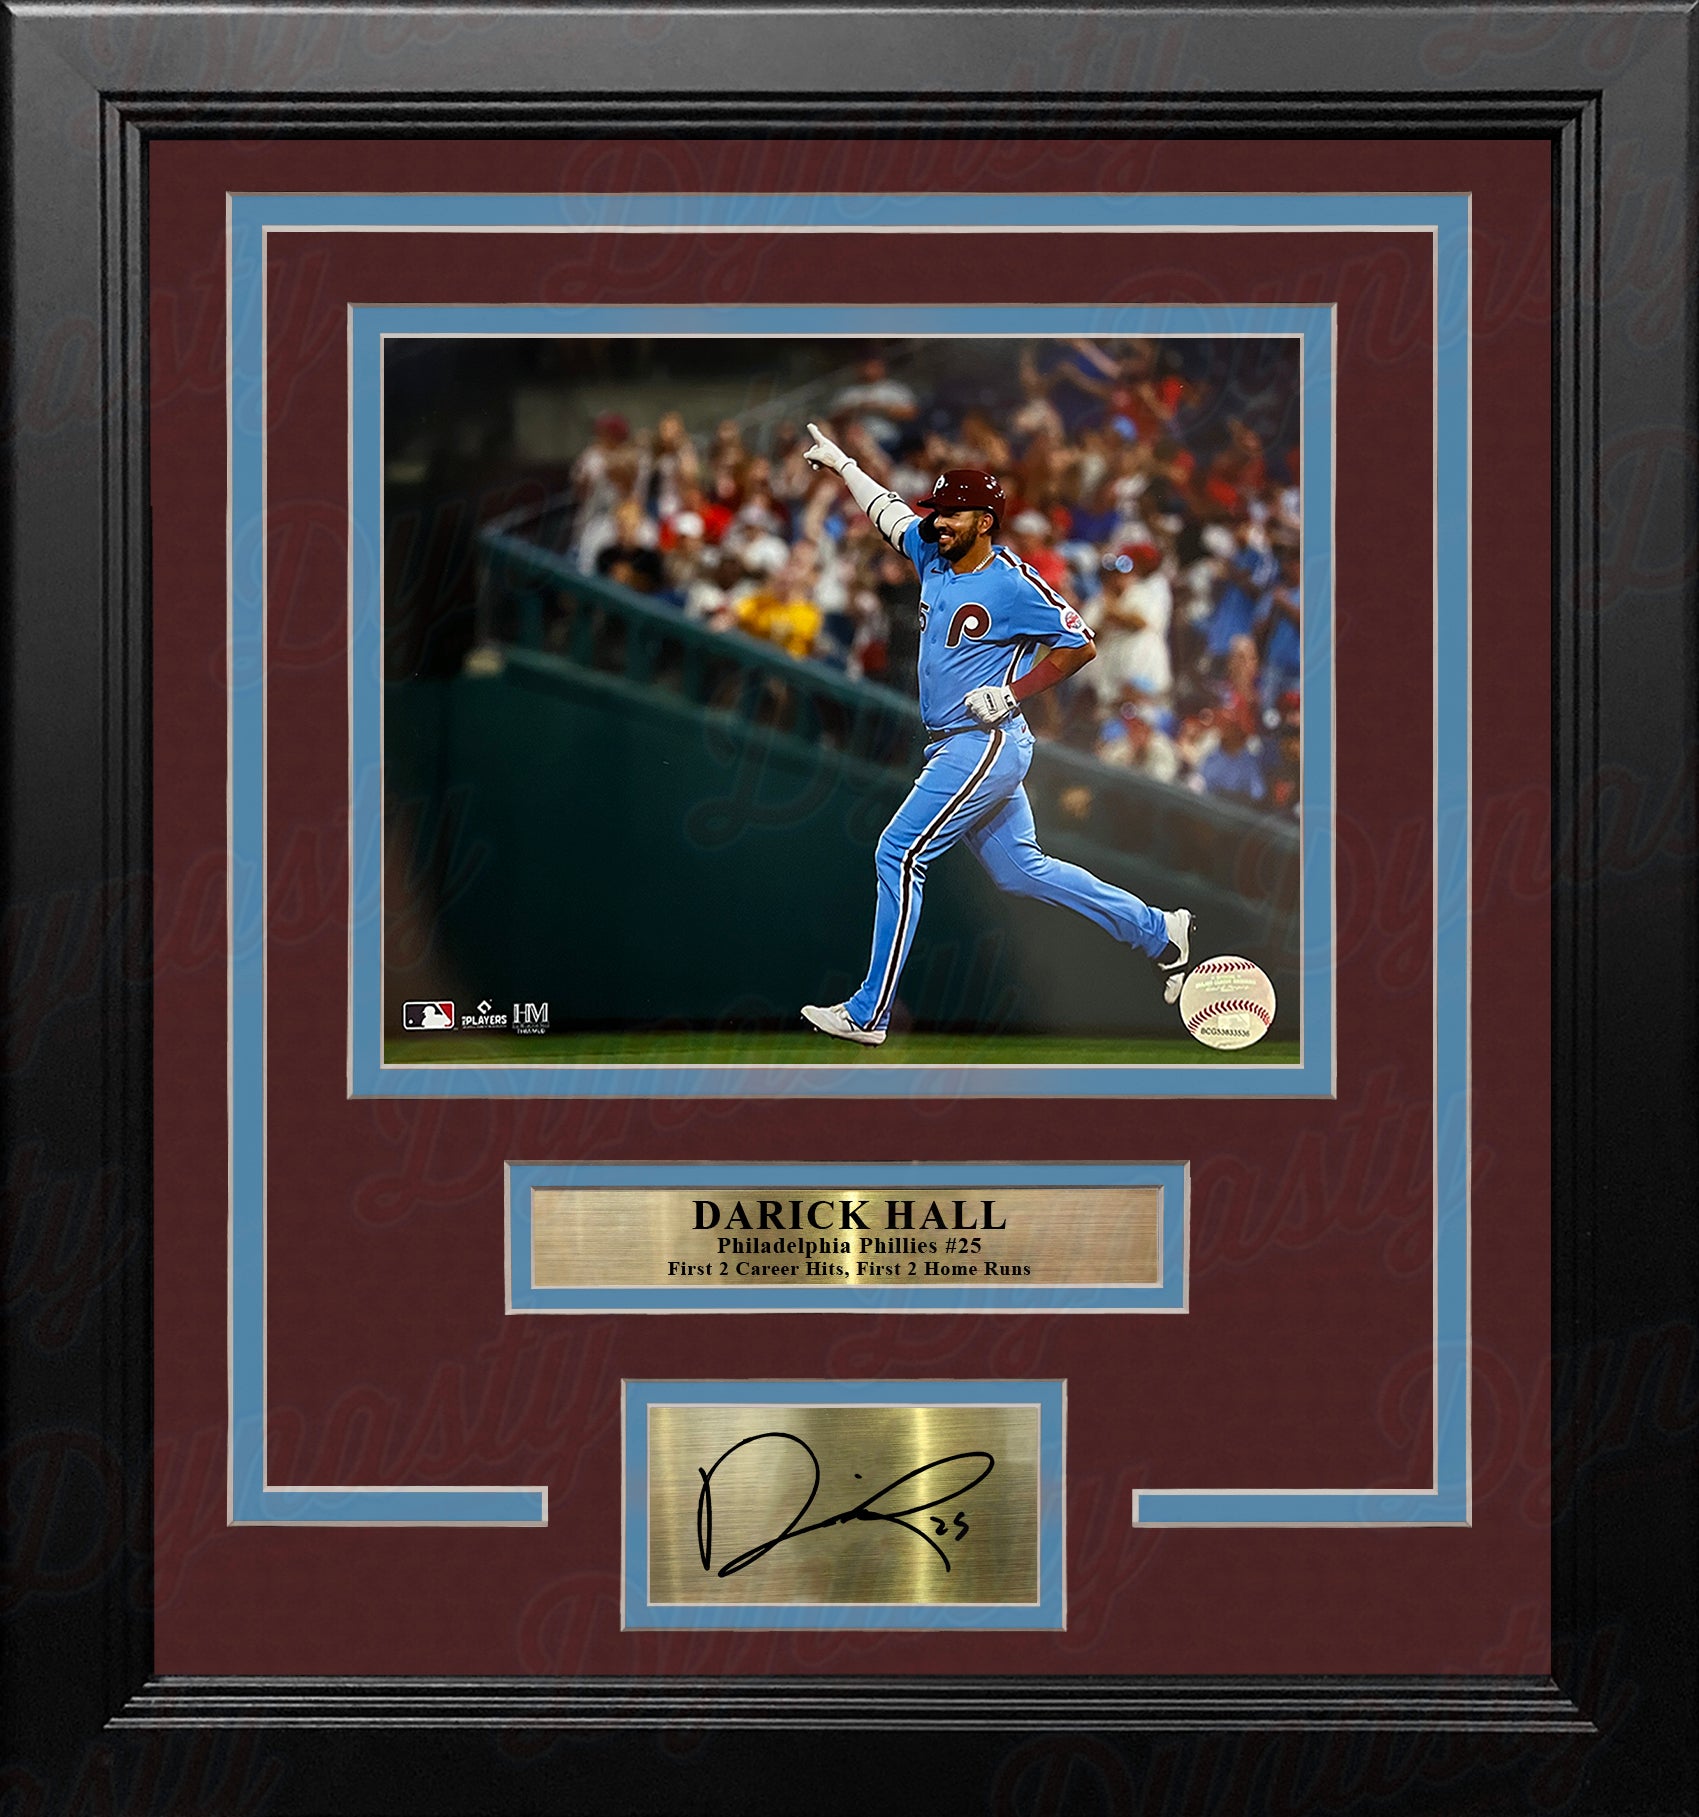 Darick Hall Runs The Bases Philadelphia Phillies 8x10 Framed Baseball Photo with Engraved Autograph - Dynasty Sports & Framing 